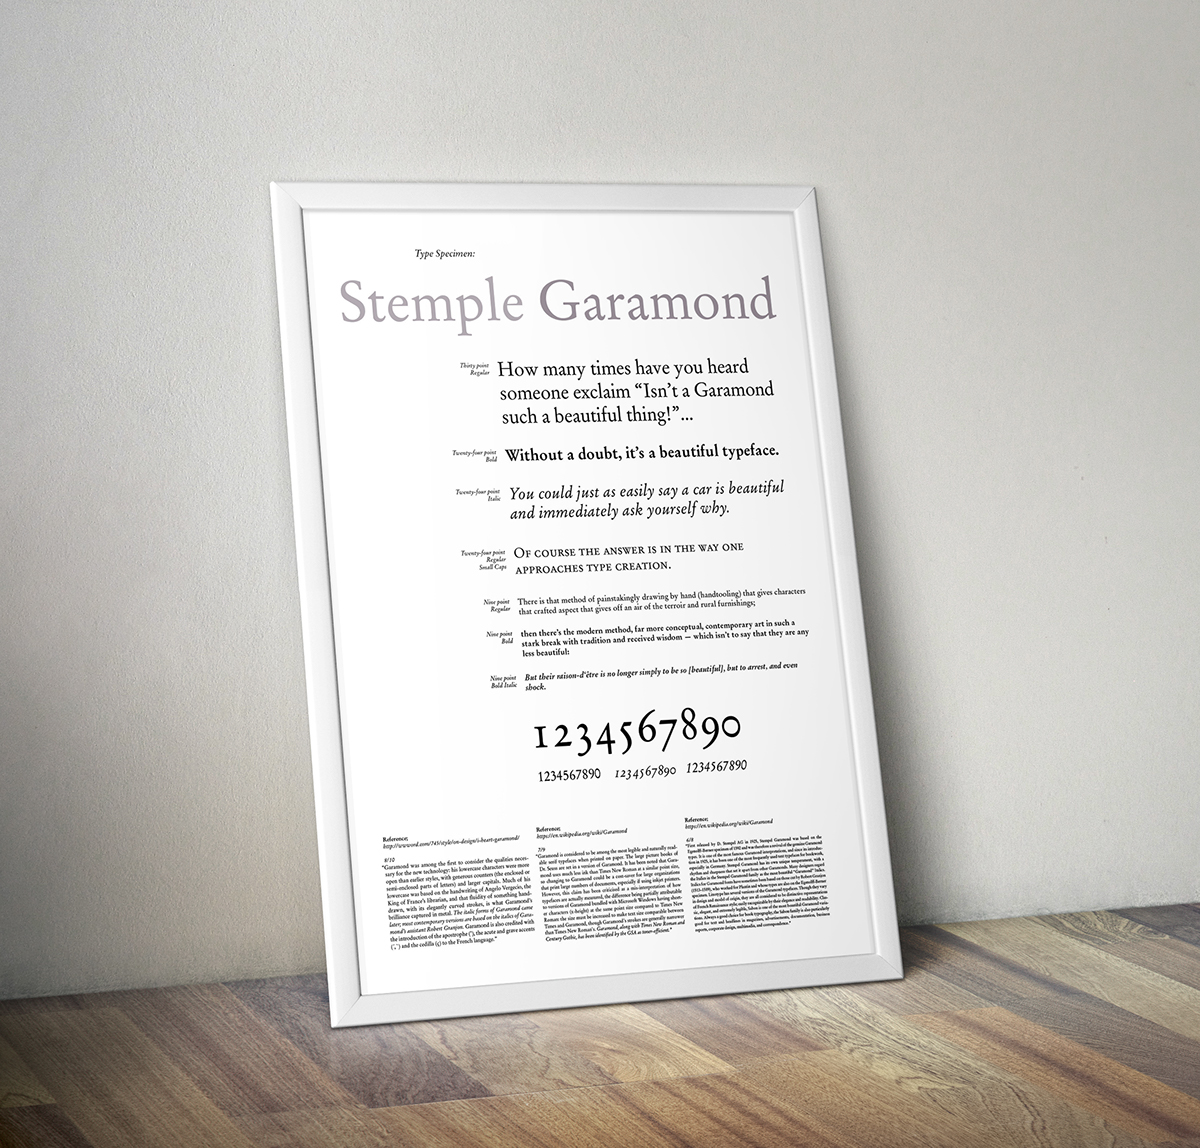 garmond stemple garamond BYUI byu idaho font calendar font specemin